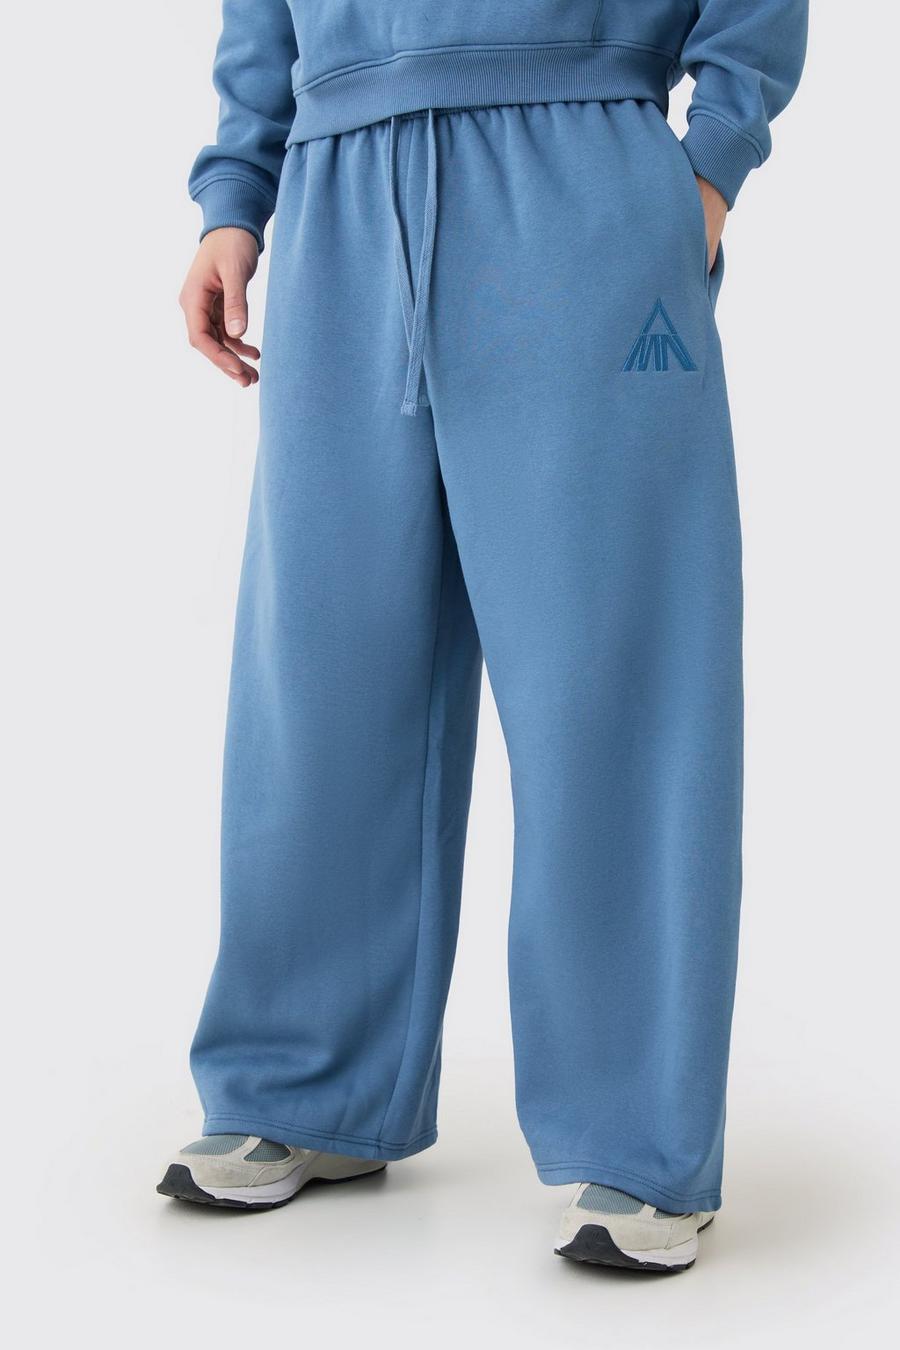 Pantalón deportivo MAN de pernera ancha, Dusty blue